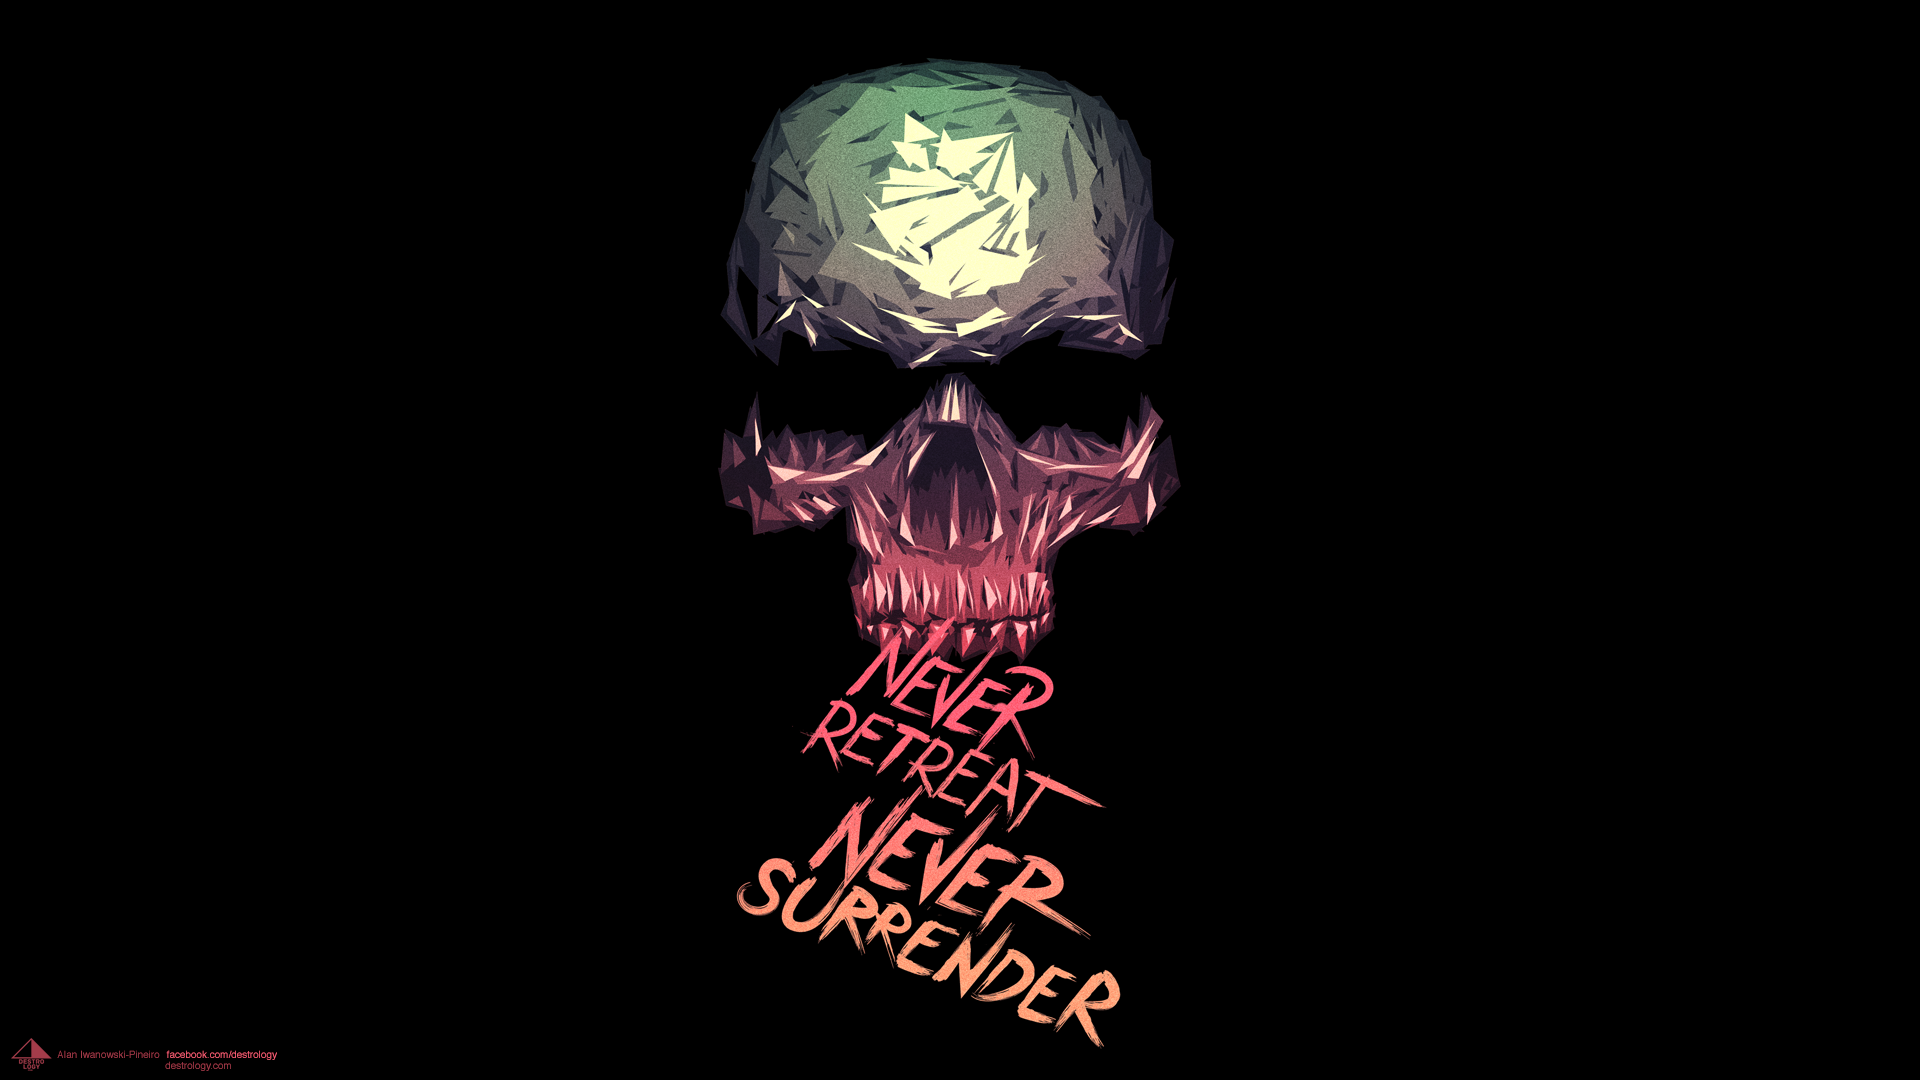 Never retreat Never surrender !